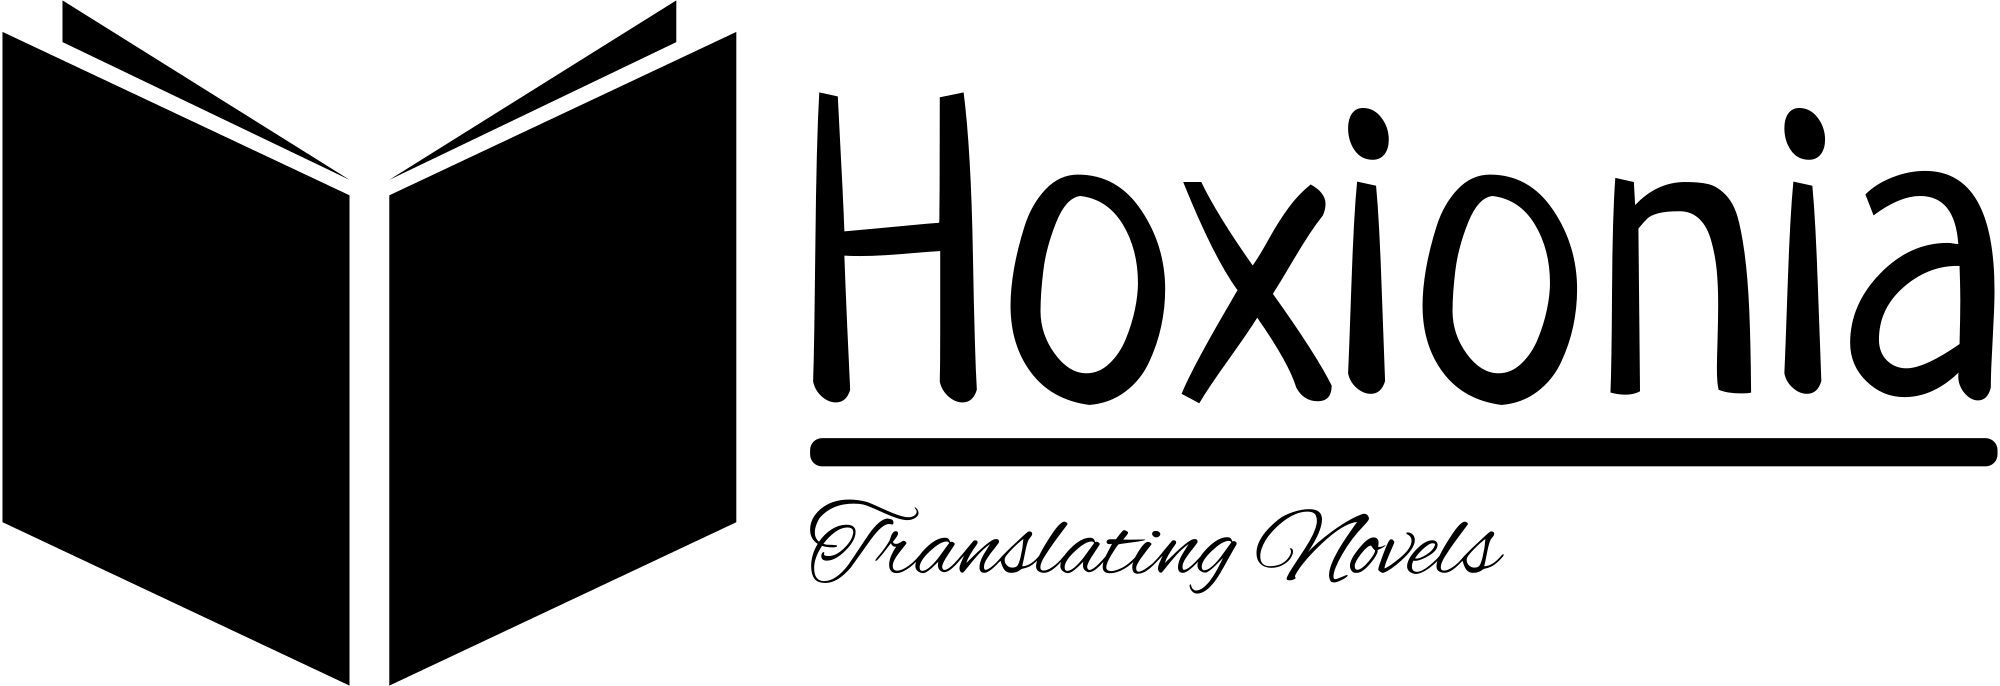 Hoxionia - Translating Novels so that everyone can enjoy.